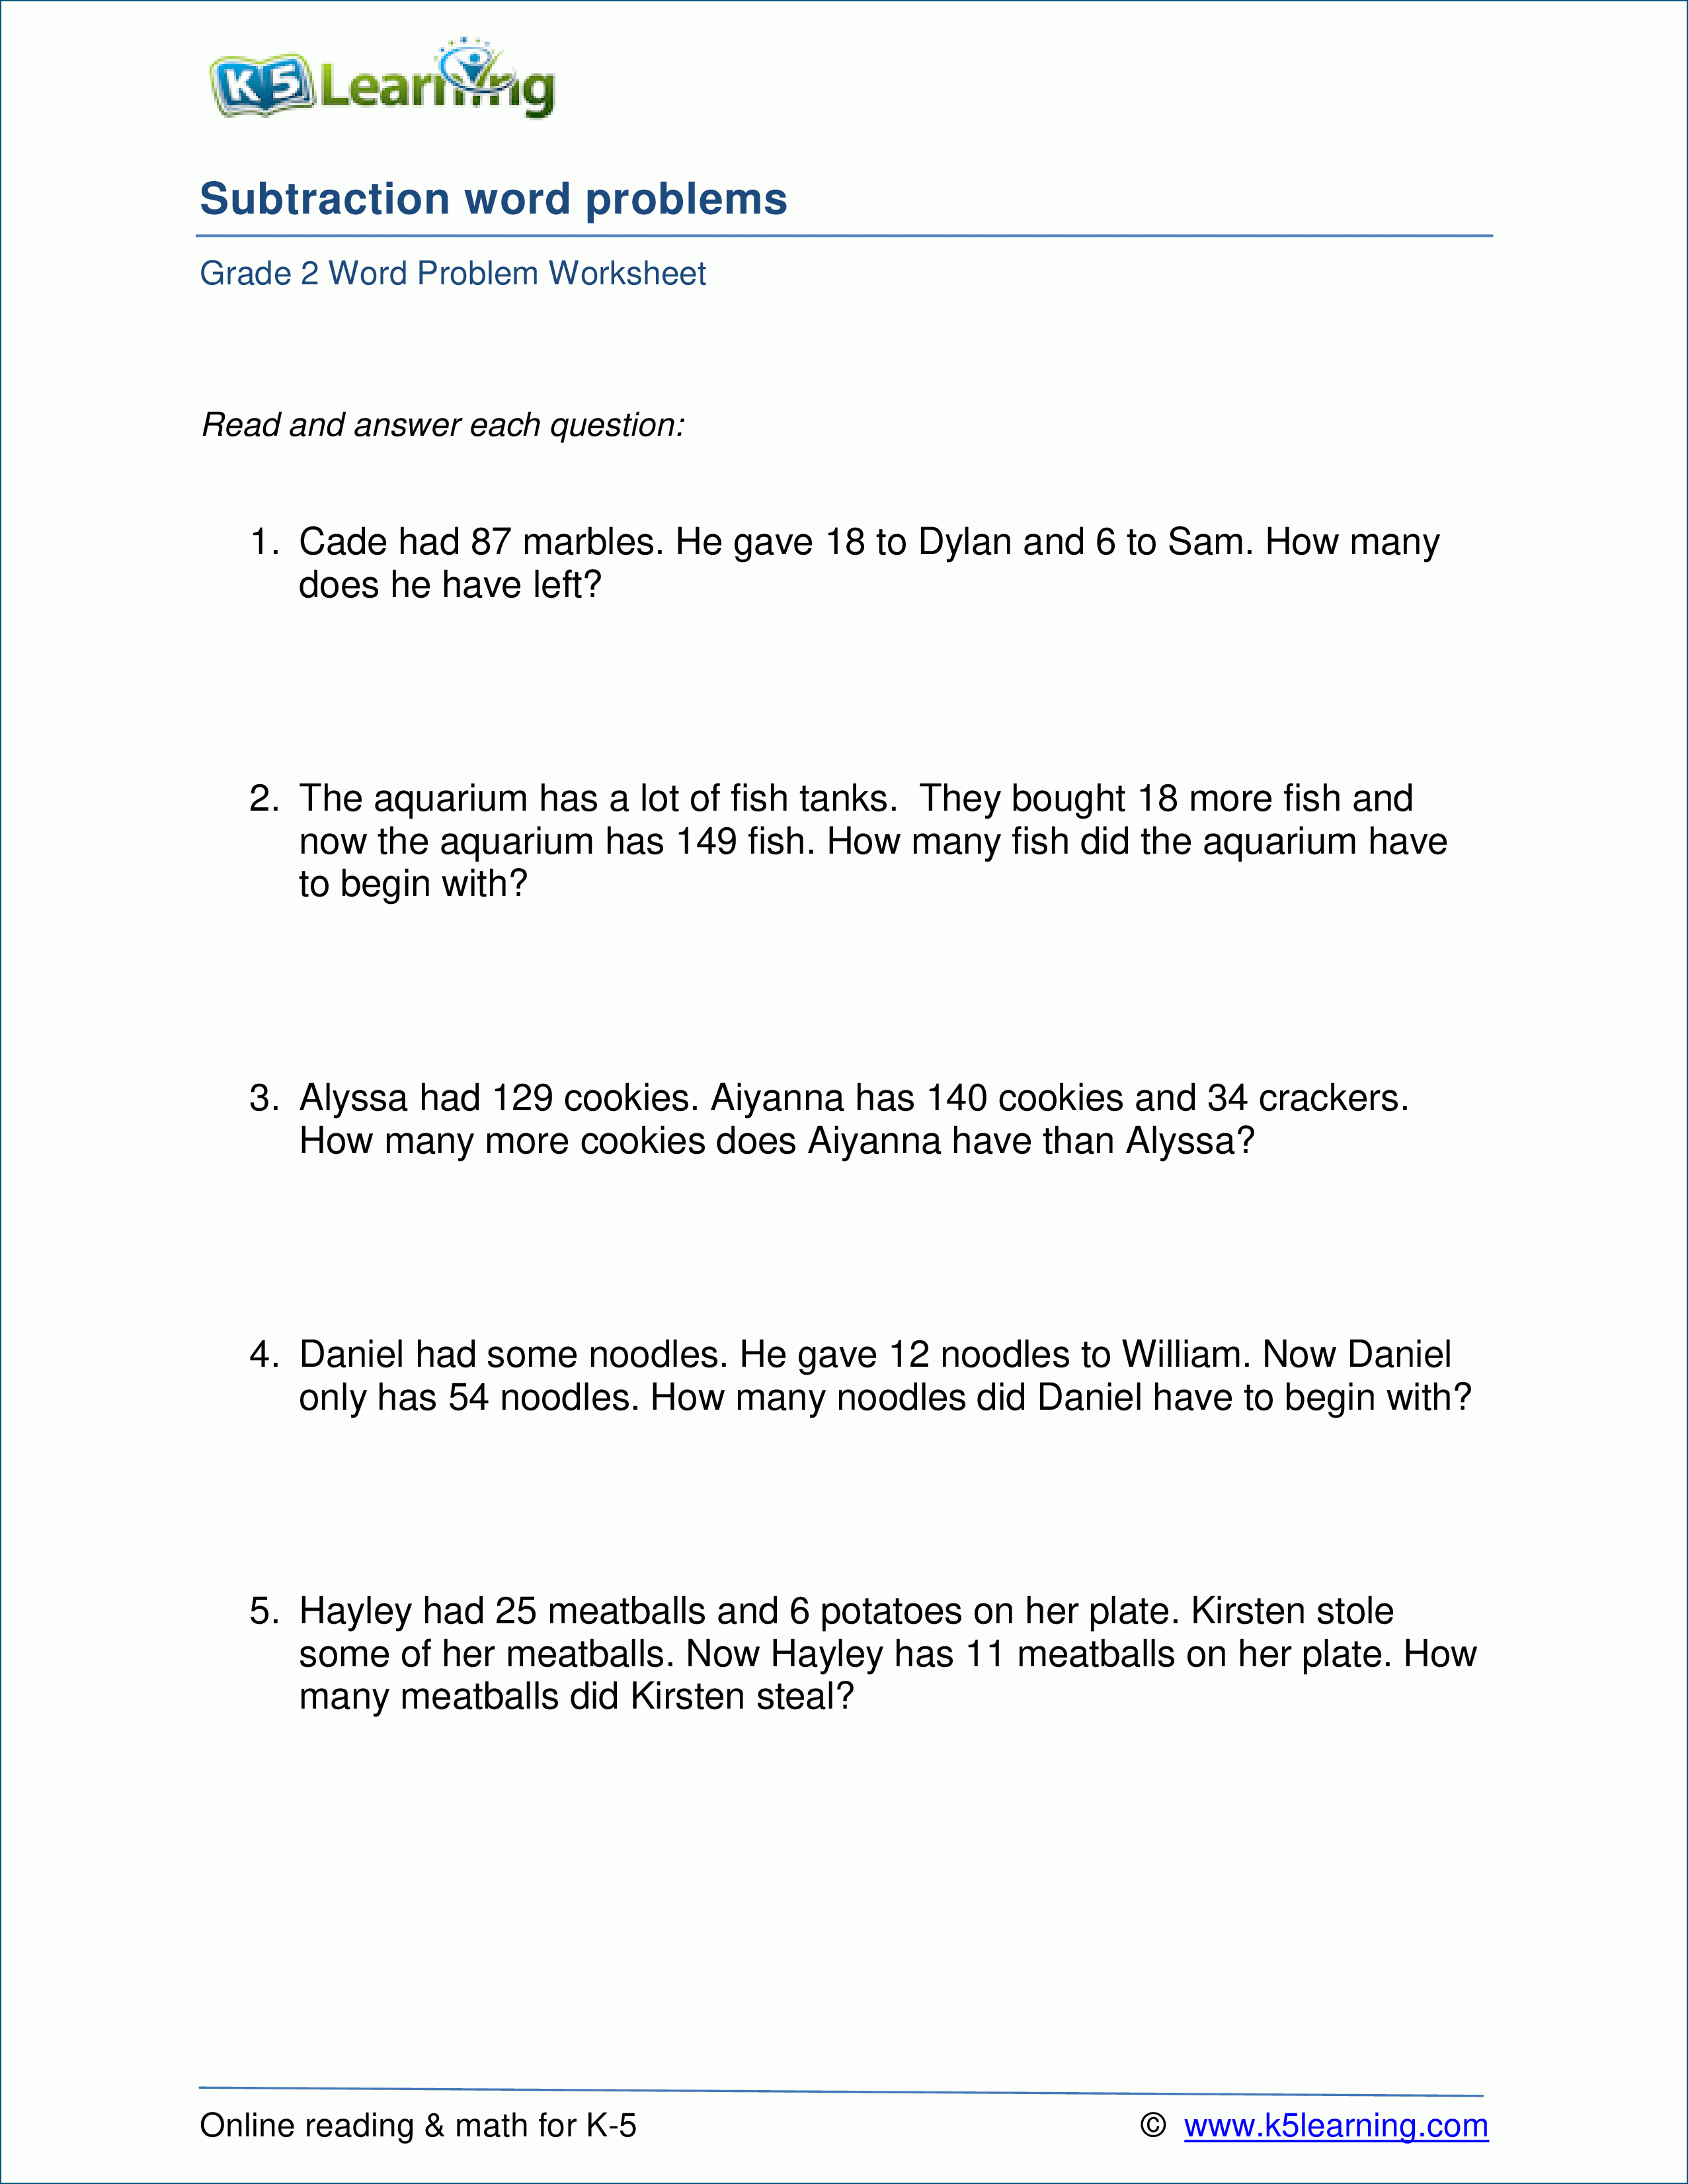 Grade 2 Subtraction Word Problem Worksheets (1-3 Digits) | K5 Learning | Grade 2 Math Word Problems Printable Worksheets